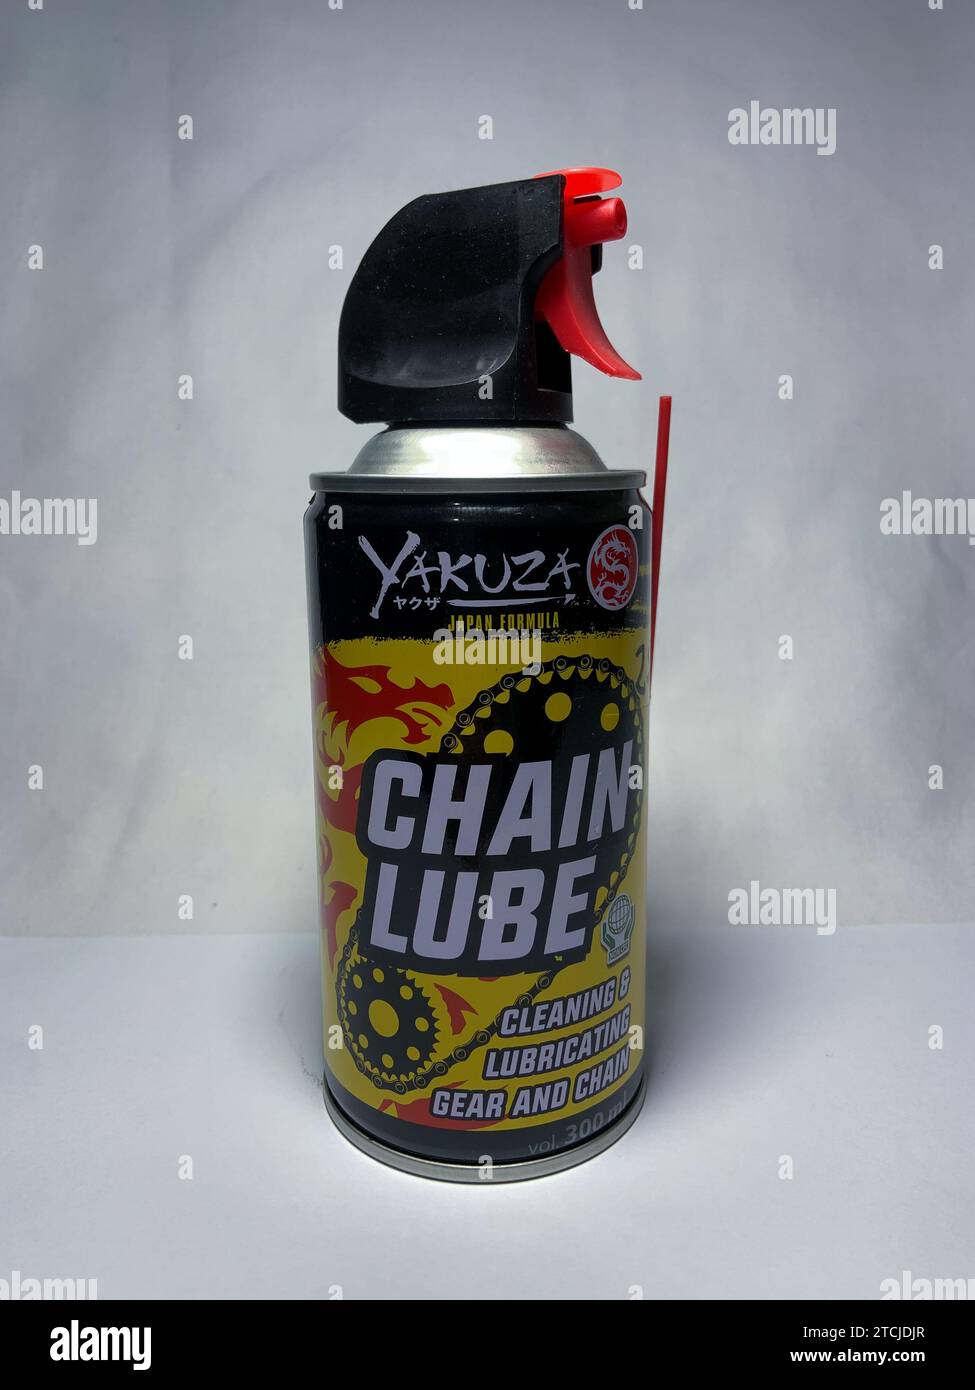 Surakarta, Indonesia - November 20, 2023 : Yakuza chain lube, cleaning and lubricating gear and chain. Yakuza japan formula 300ml. Stock Photo